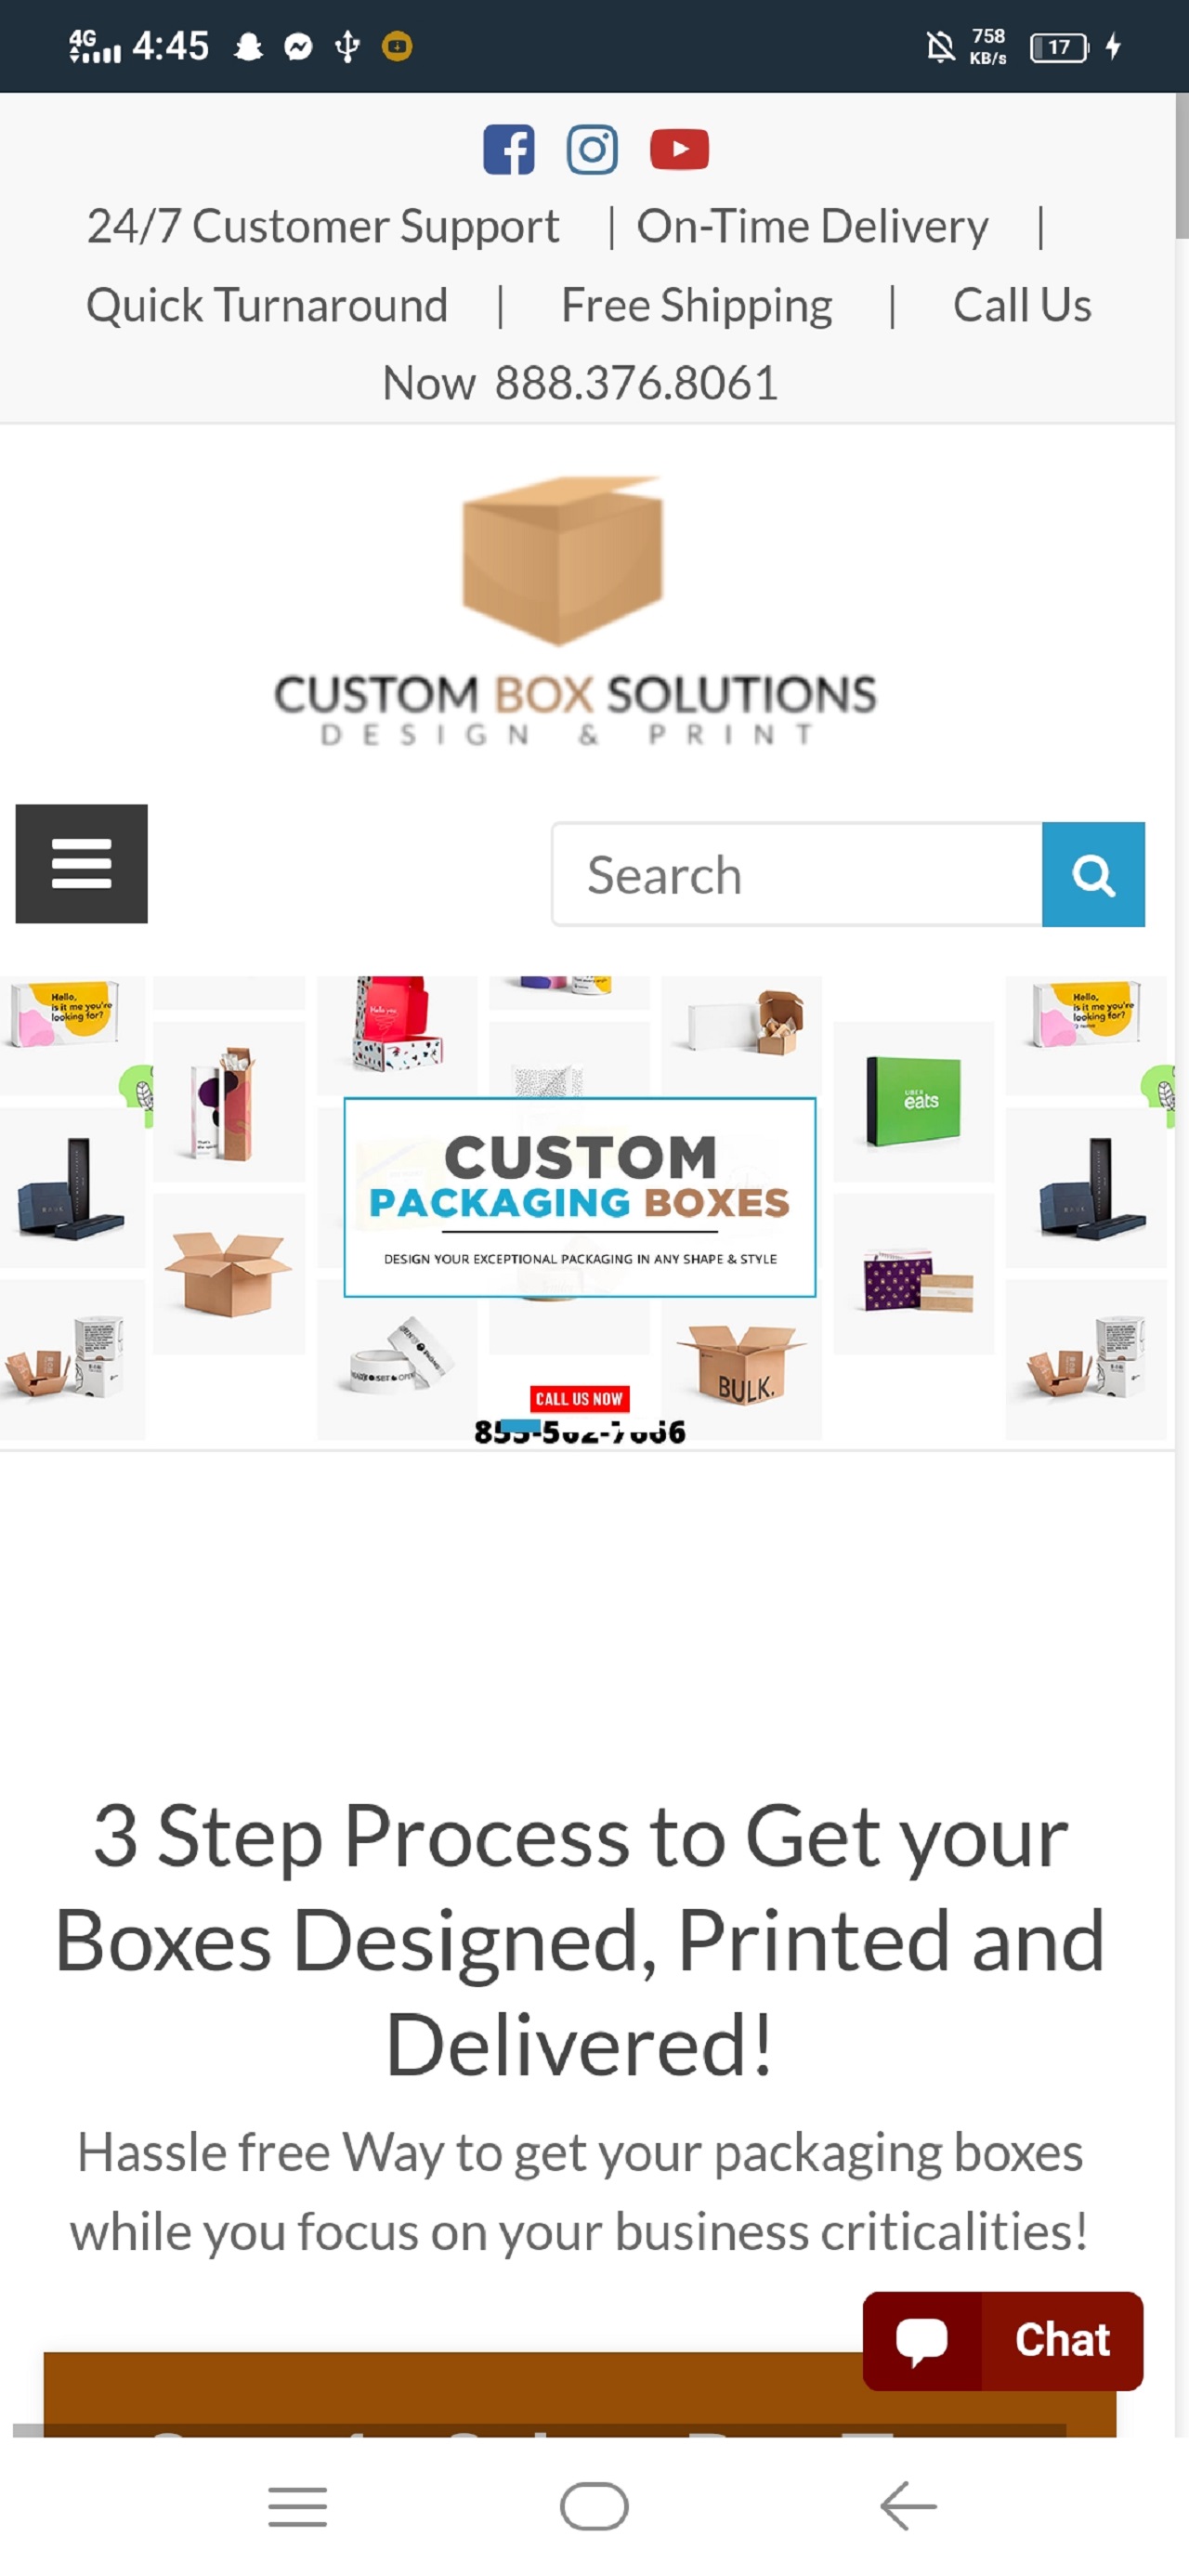 Custom Box Solutions